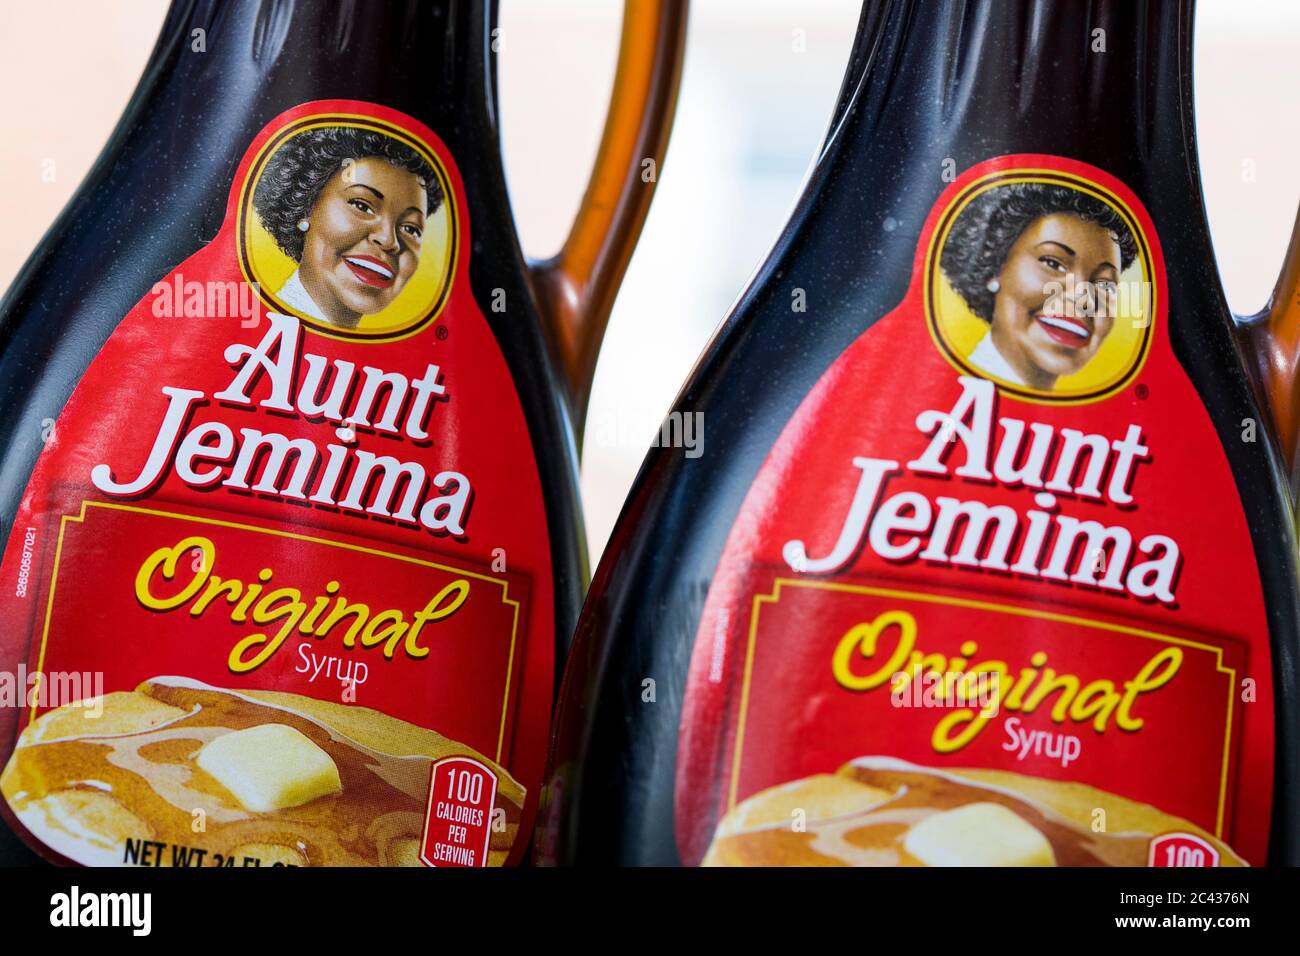 Bottles of Aunt Jemima Syrup. Stock Photo